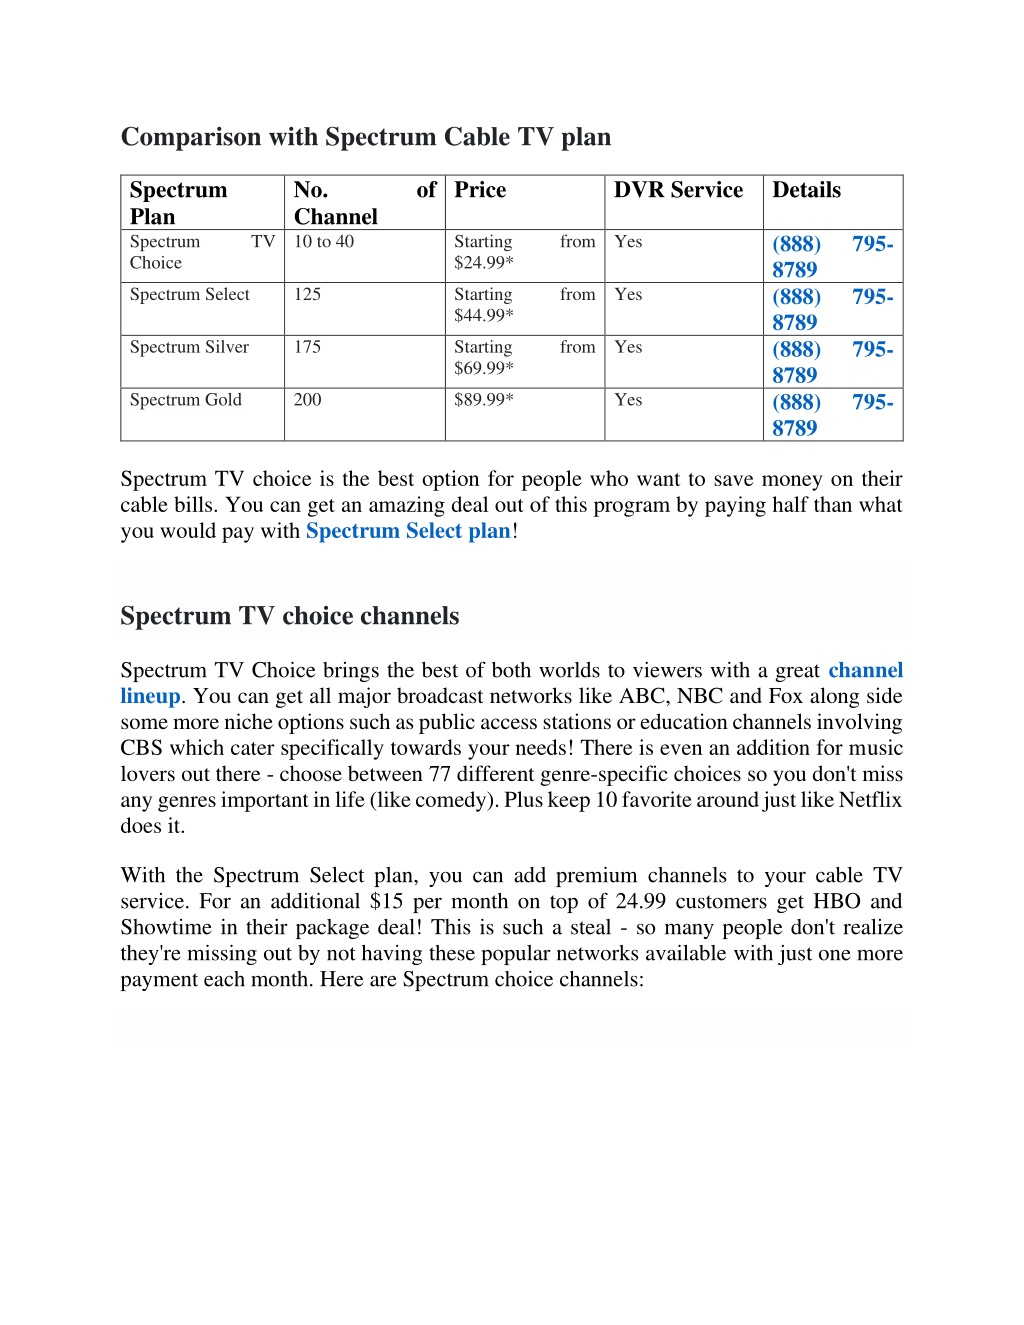 spectrum tv choice channel listing